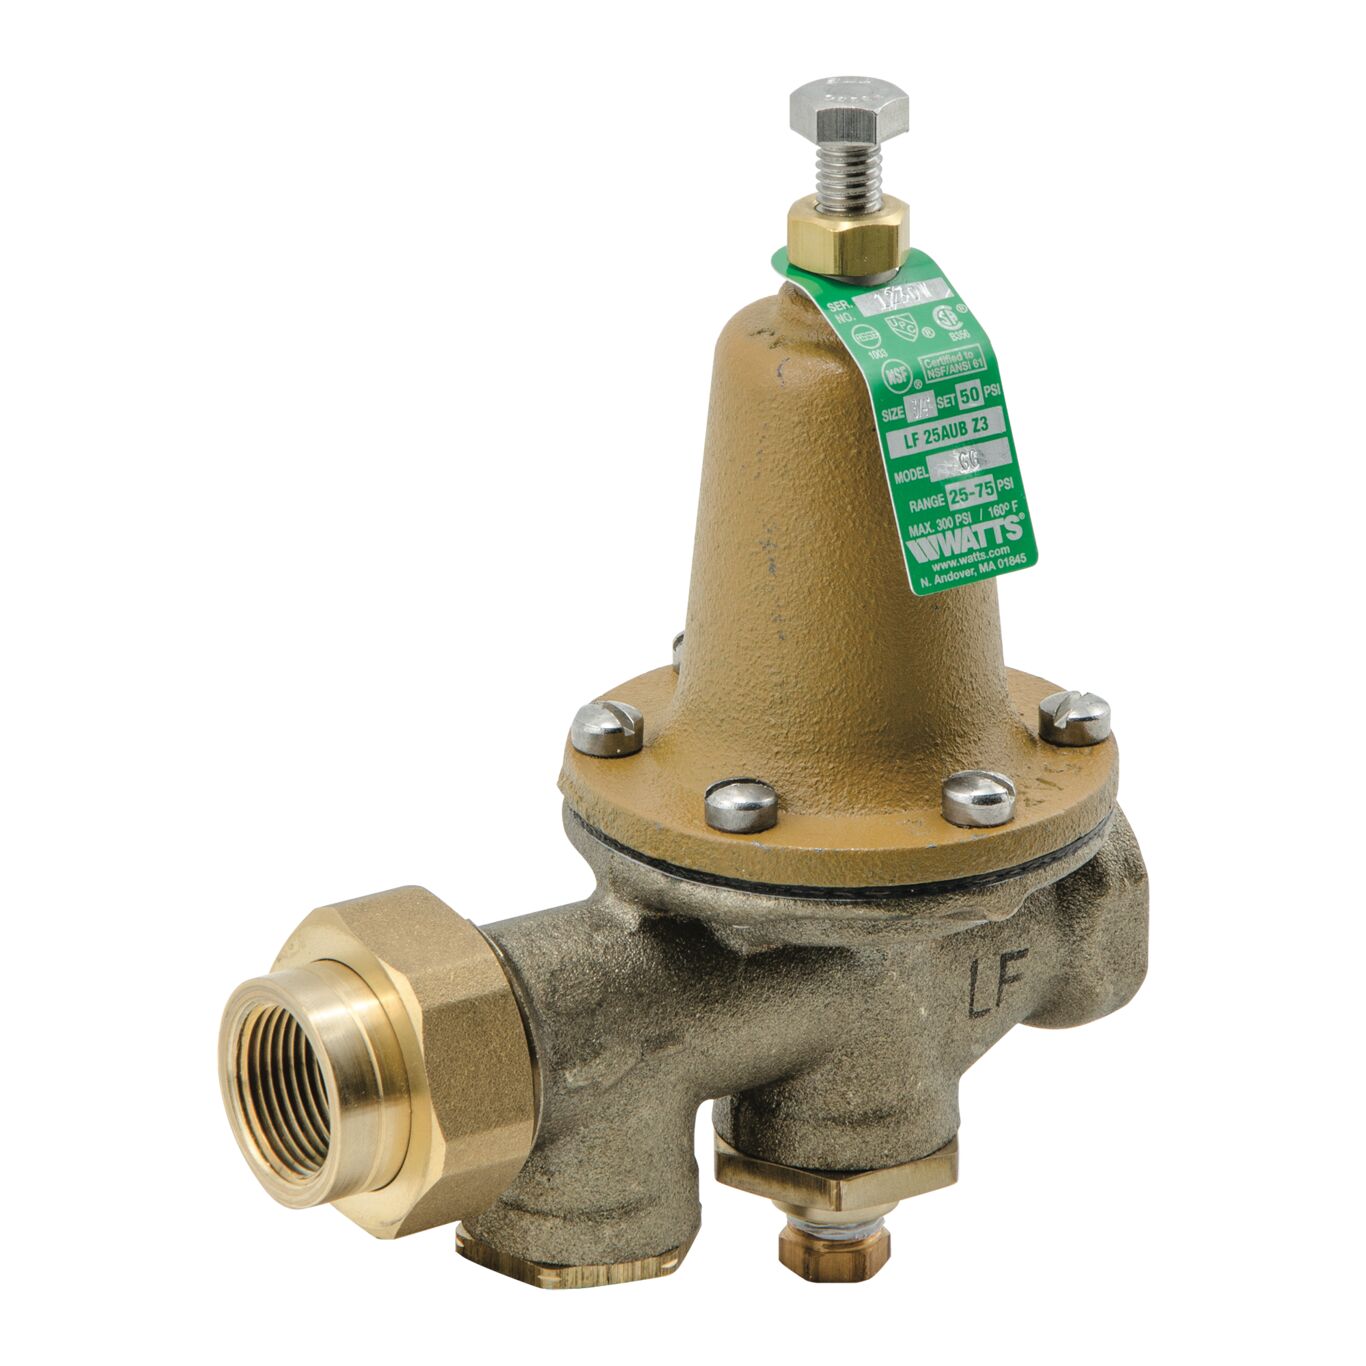 Watts 3/4 LF 25 AUB-Z3 Water Pressure Reducing Valve for sale online